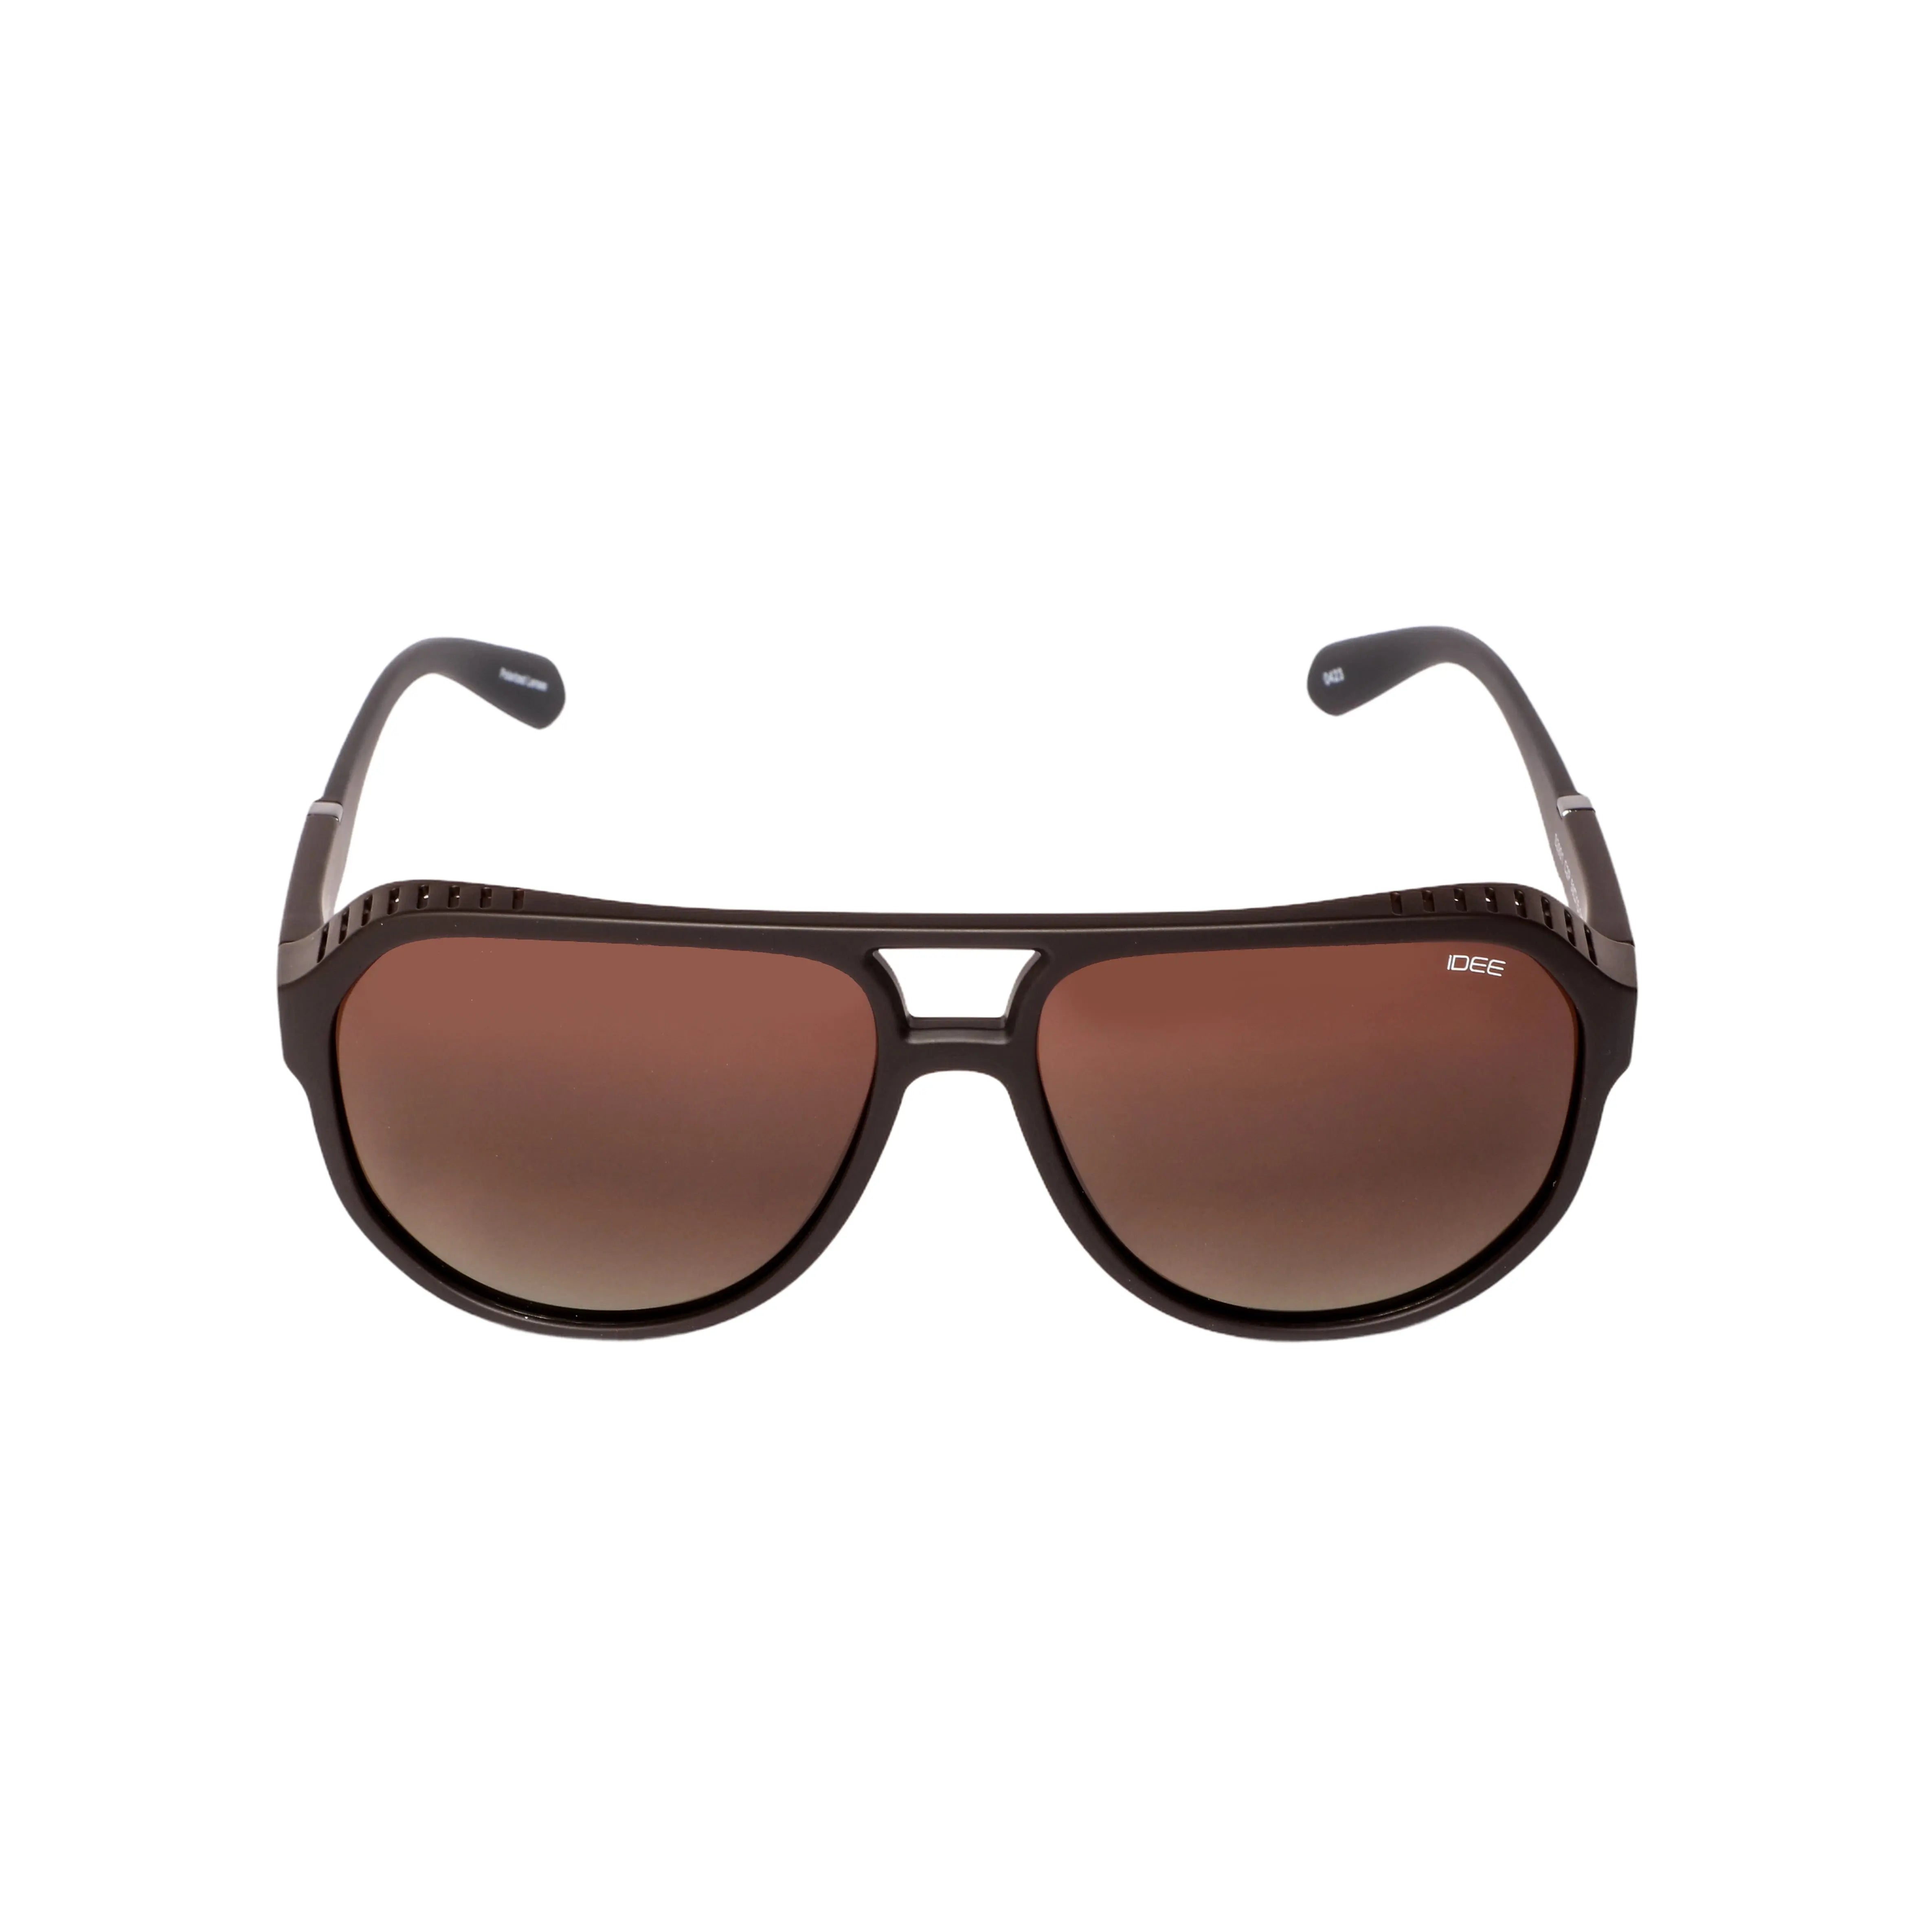 IDEE-S2991--C2 Sunglasses - Premium Sunglasses from IDEE - Just Rs. 3380! Shop now at Laxmi Opticians